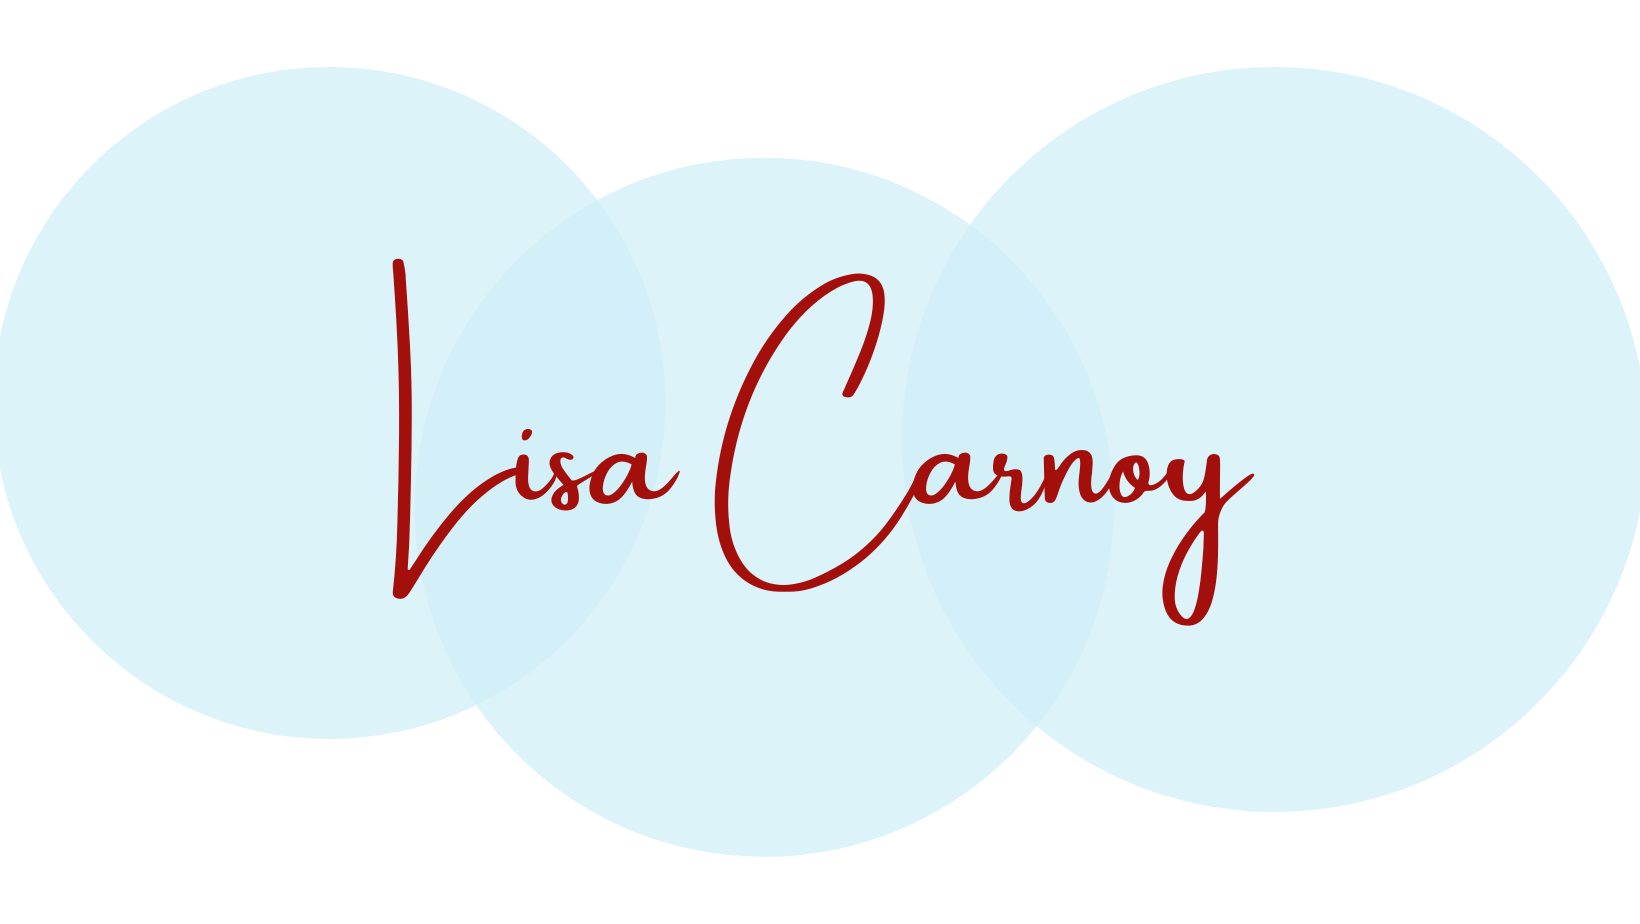 Lisa Carnoy